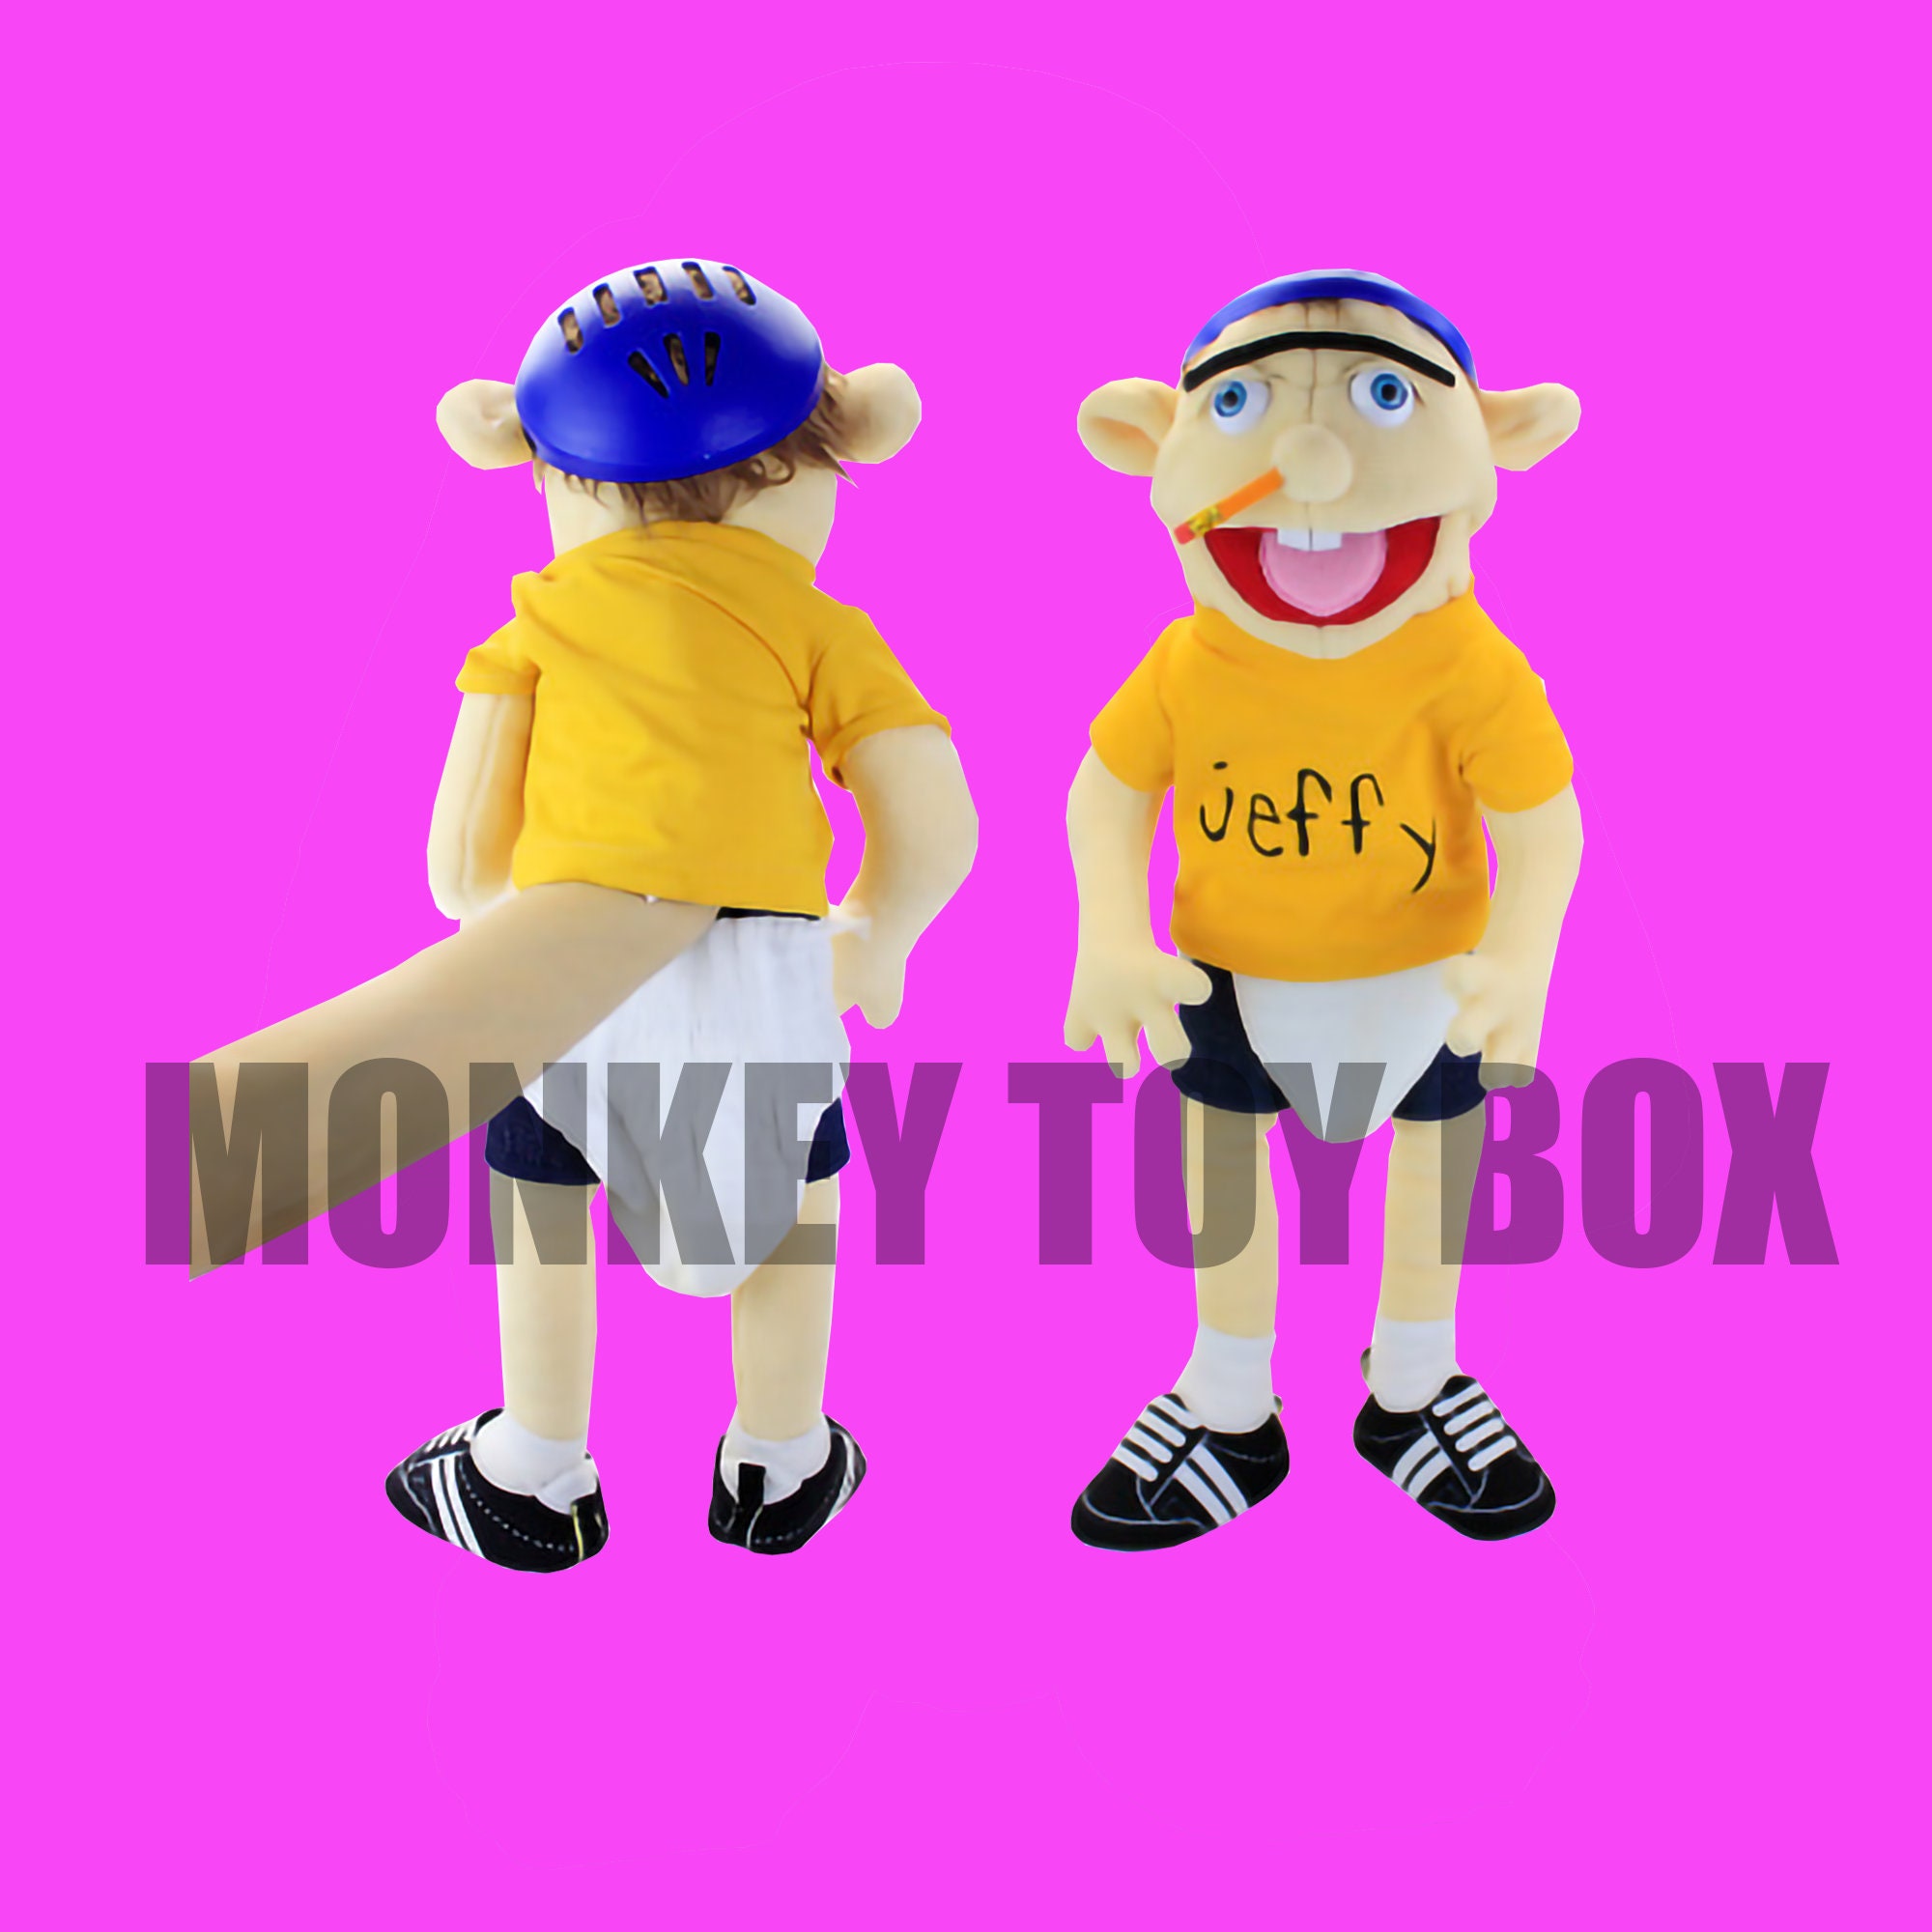 Jeffy Puppet Jeffy Puppet Plush Toy Jeffy Dolls Jeffy Figurine Playhouse  anime